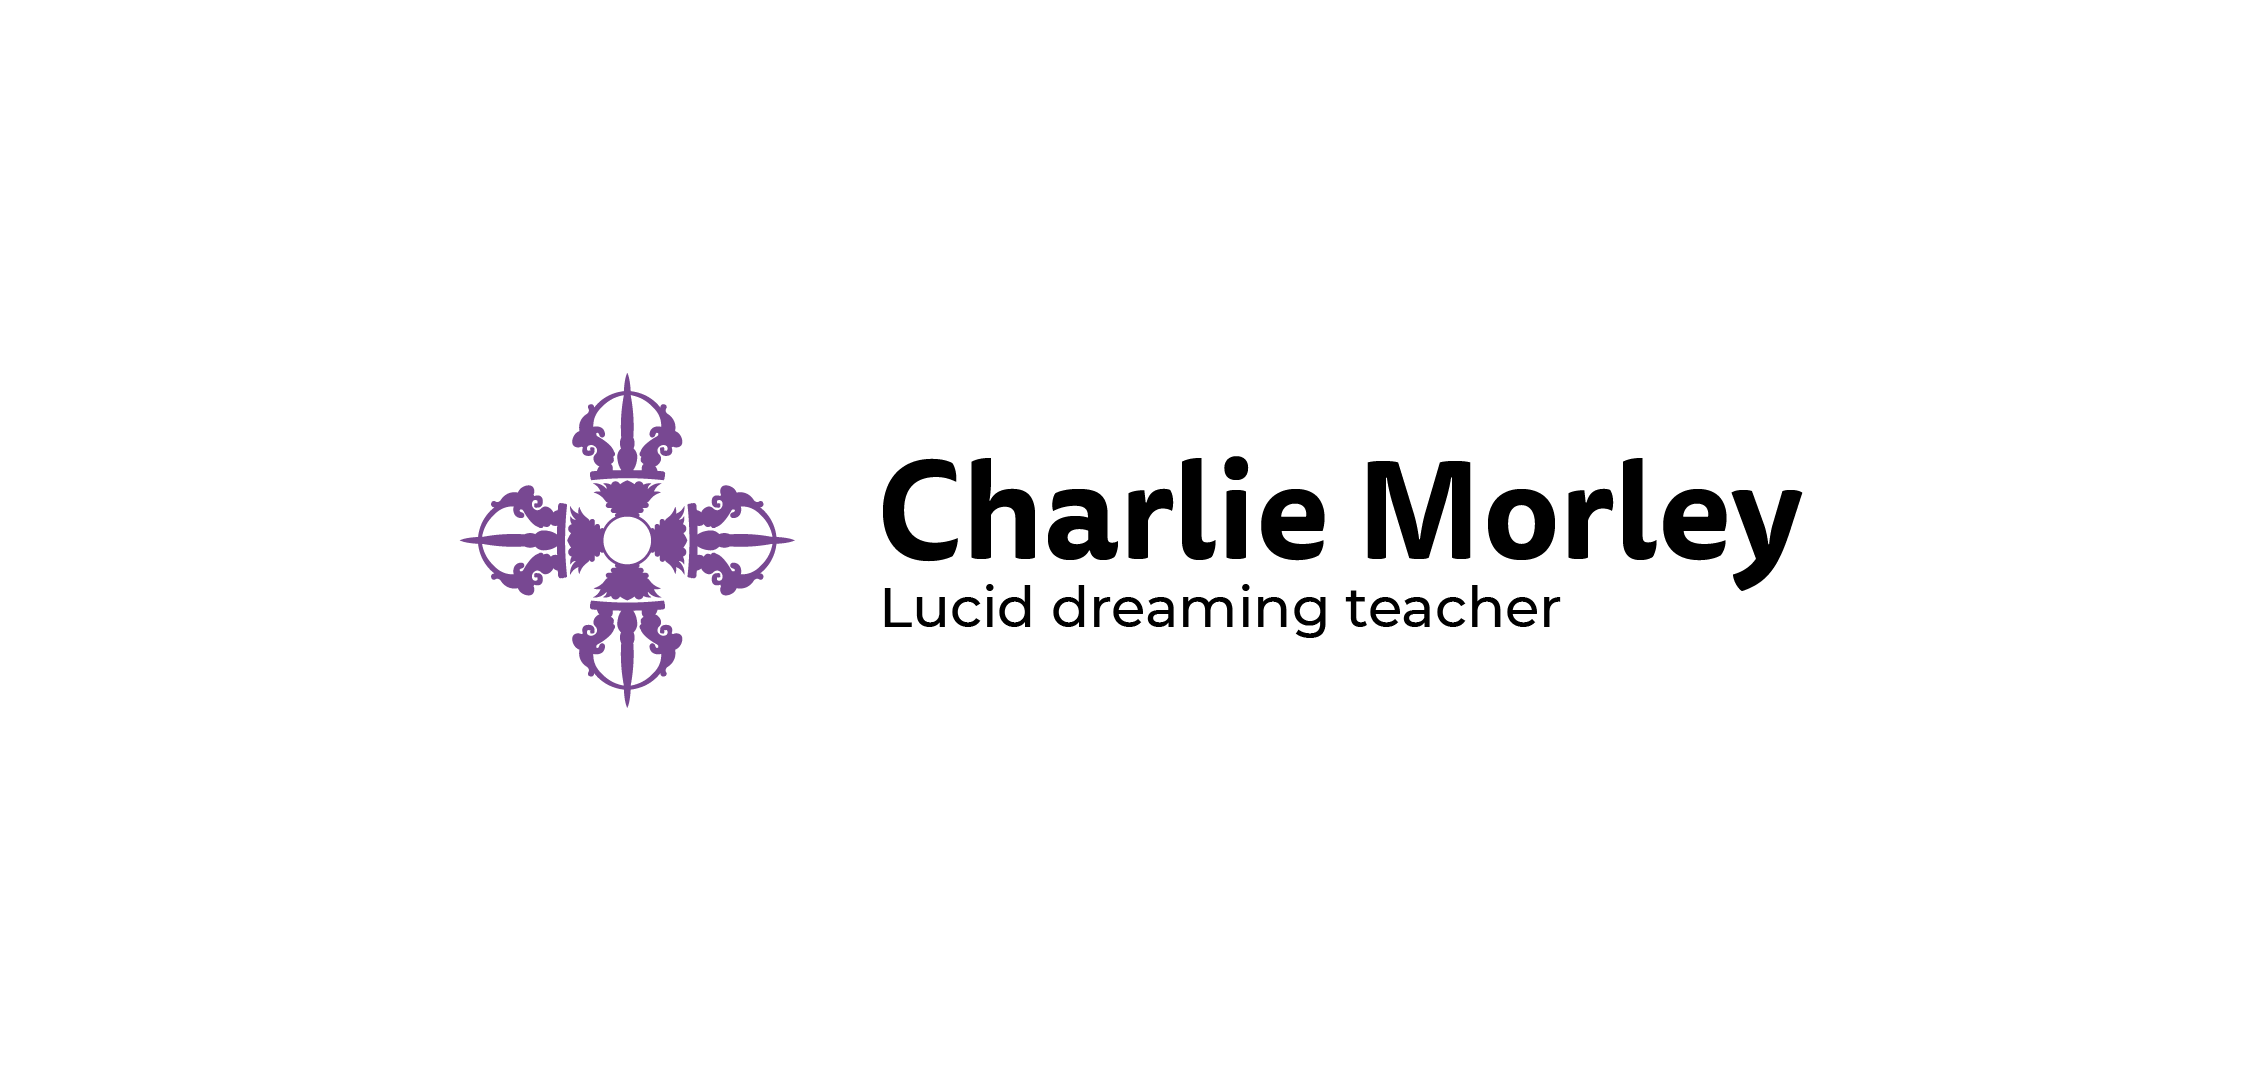 Charlie Morley